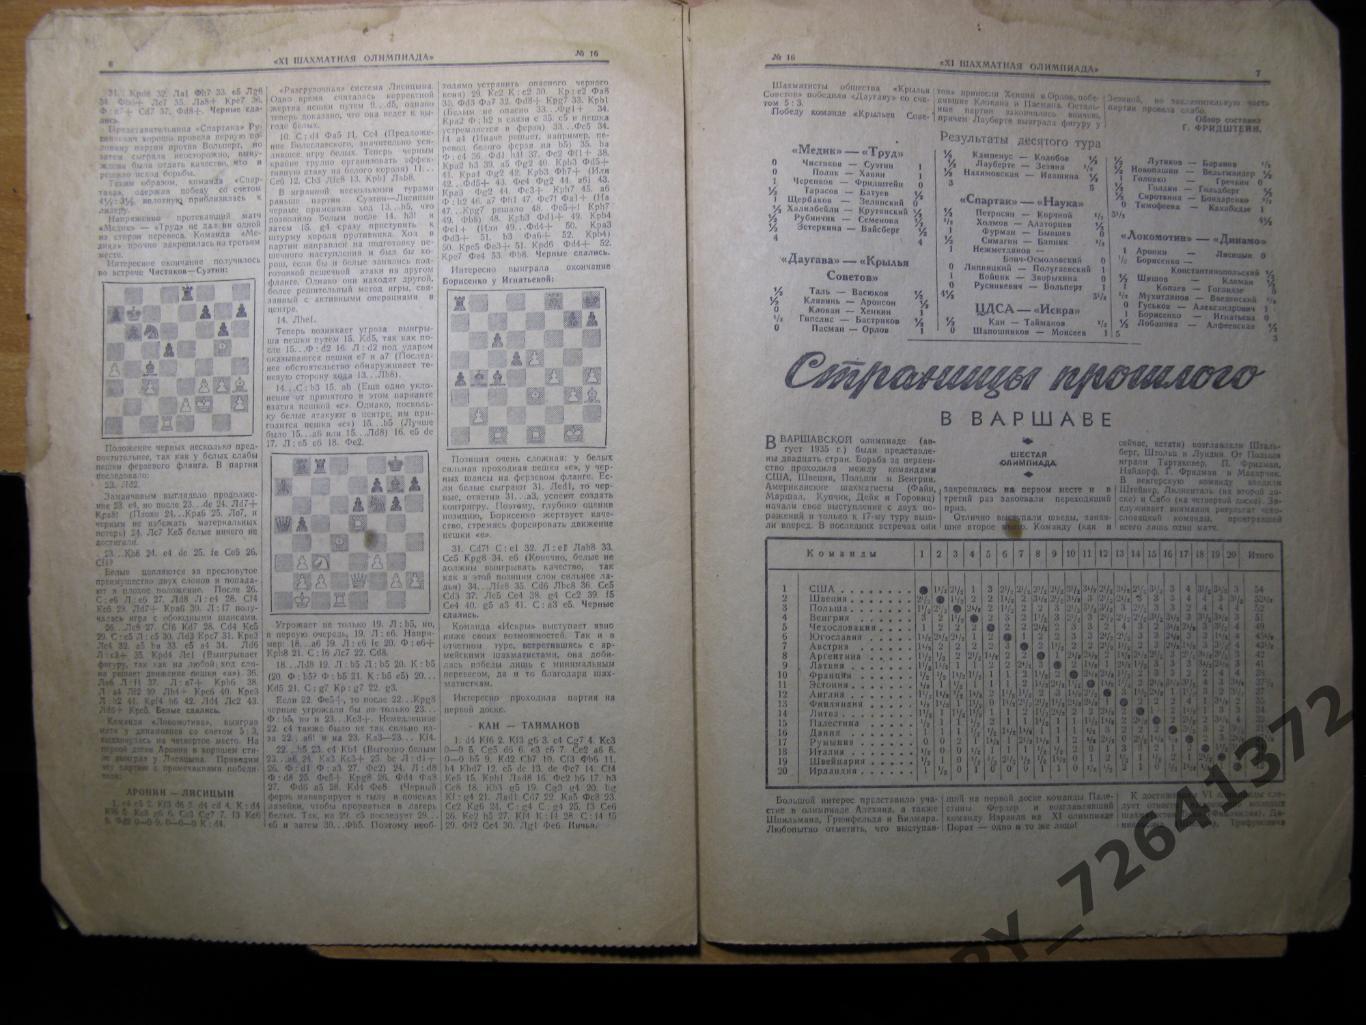 Бюллетень комитета по физкультуре и спорту 21 шахматная олимпиада.1954 г. N16 2